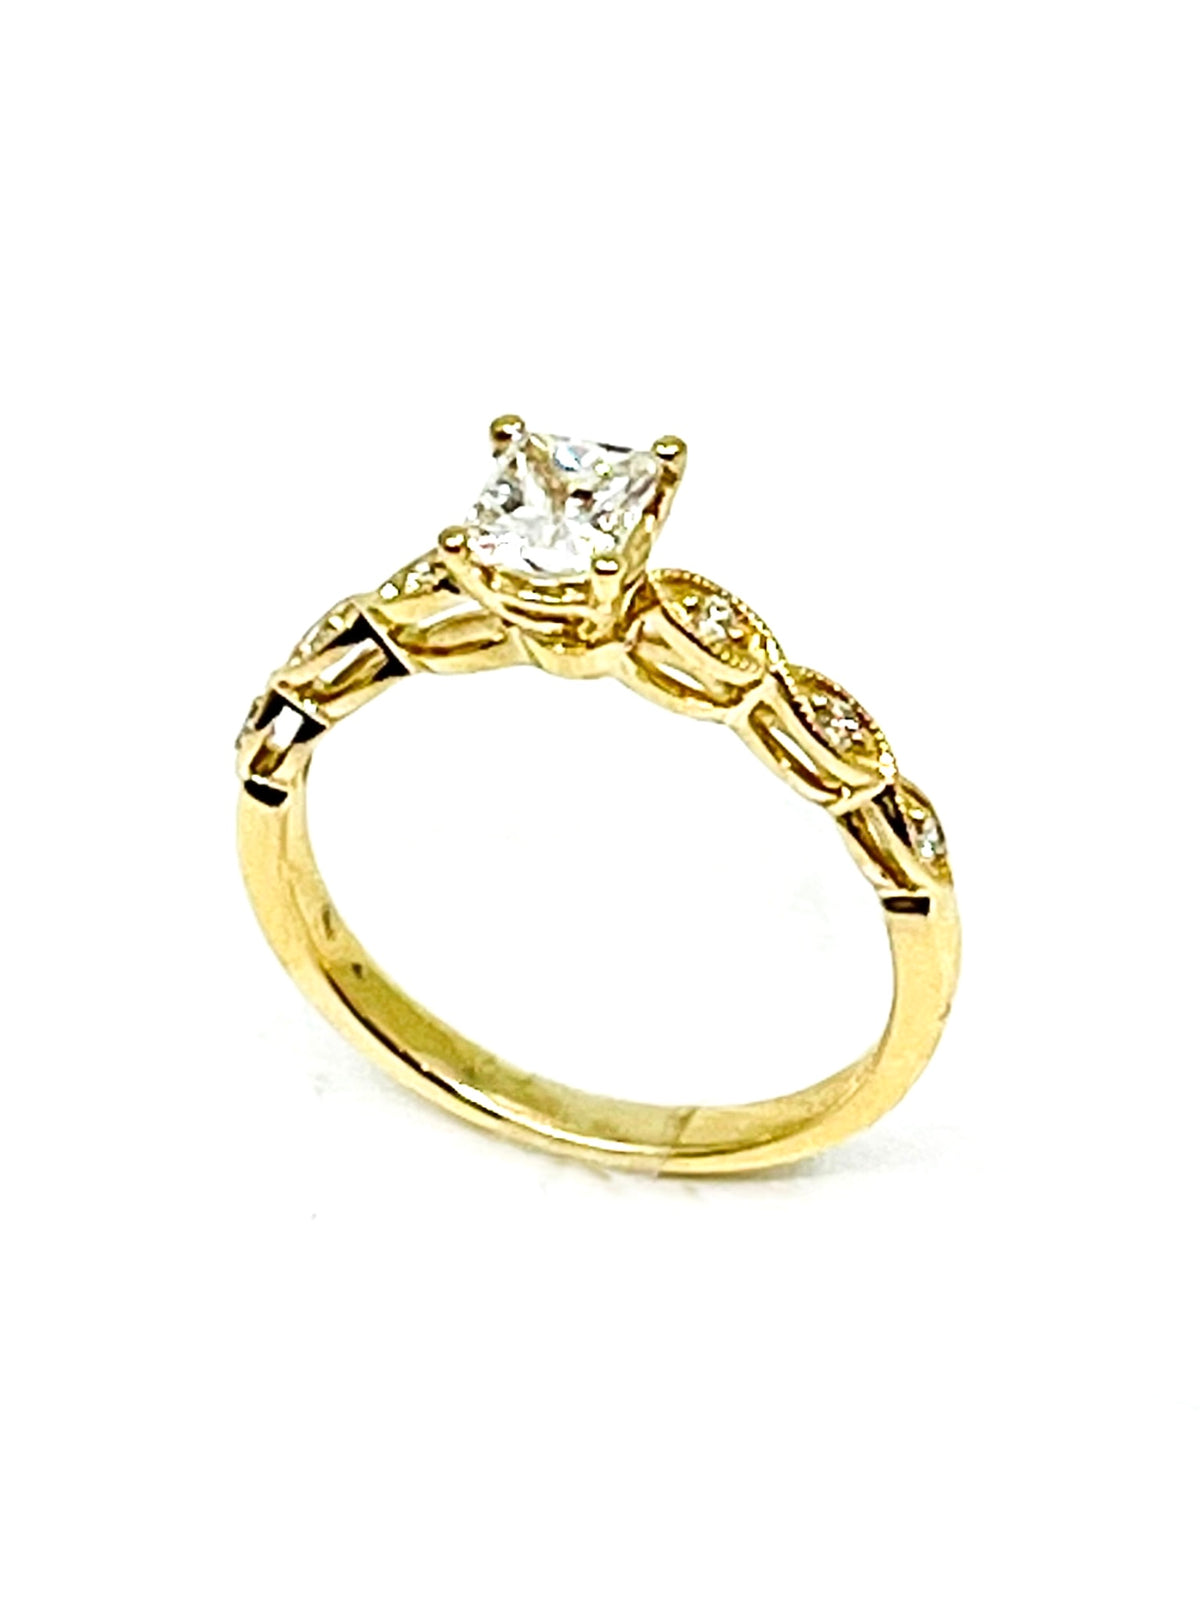 14K Yellow Gold 0.50cttw Diamond Engagement Ring, size 6.5